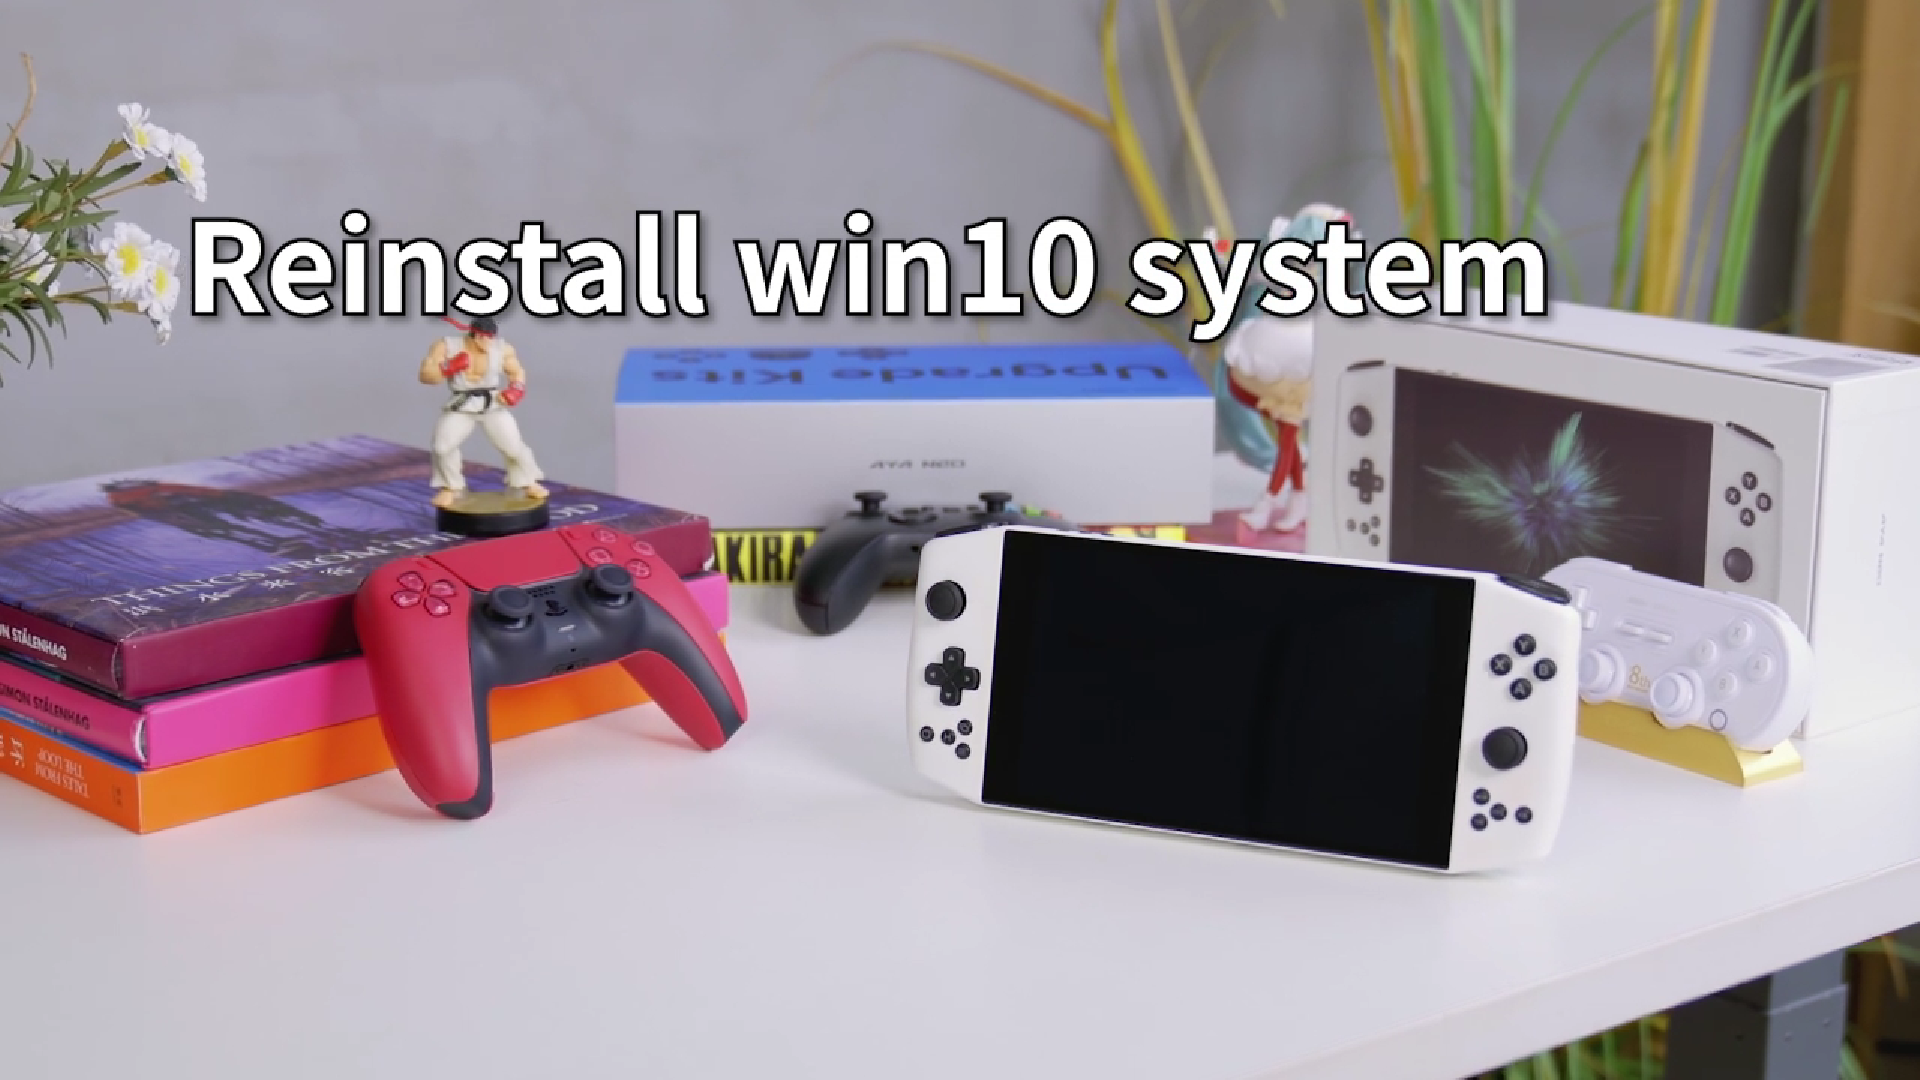 Reinstall win 10 system